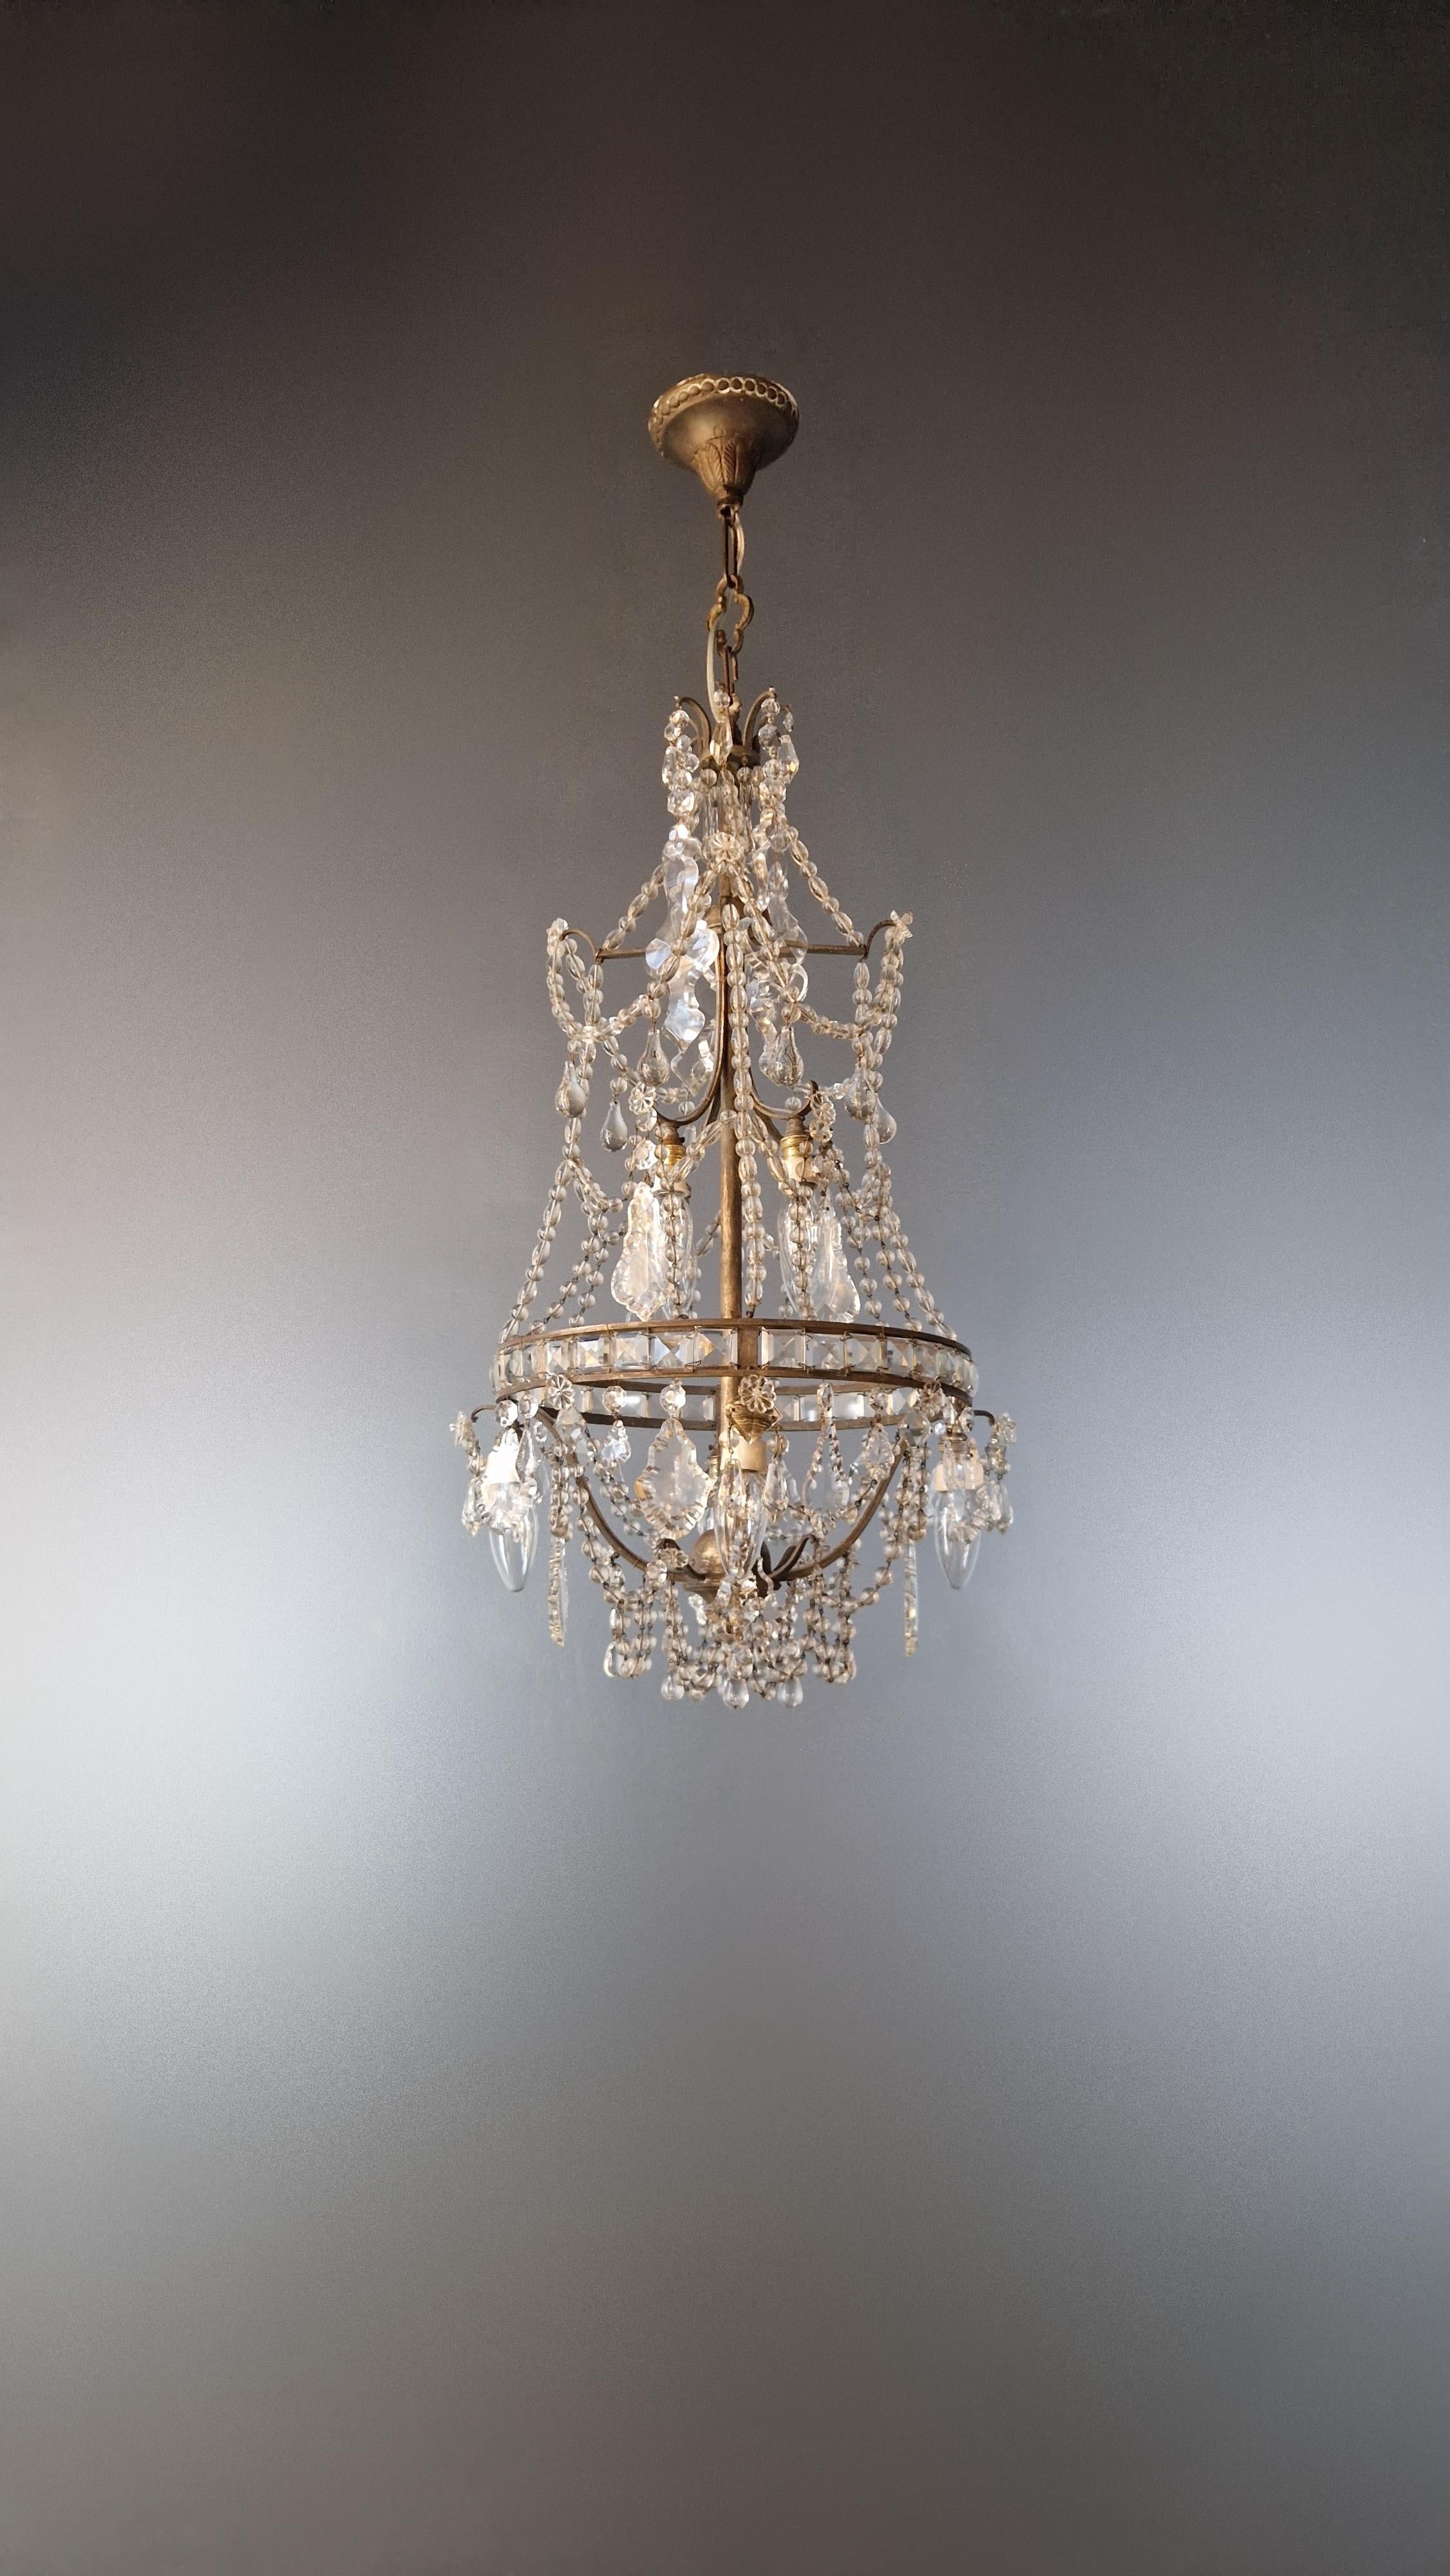 Italian Lustre A Cage Antique Art Nouveau Brass Ceiling Crystal Chandelier For Sale